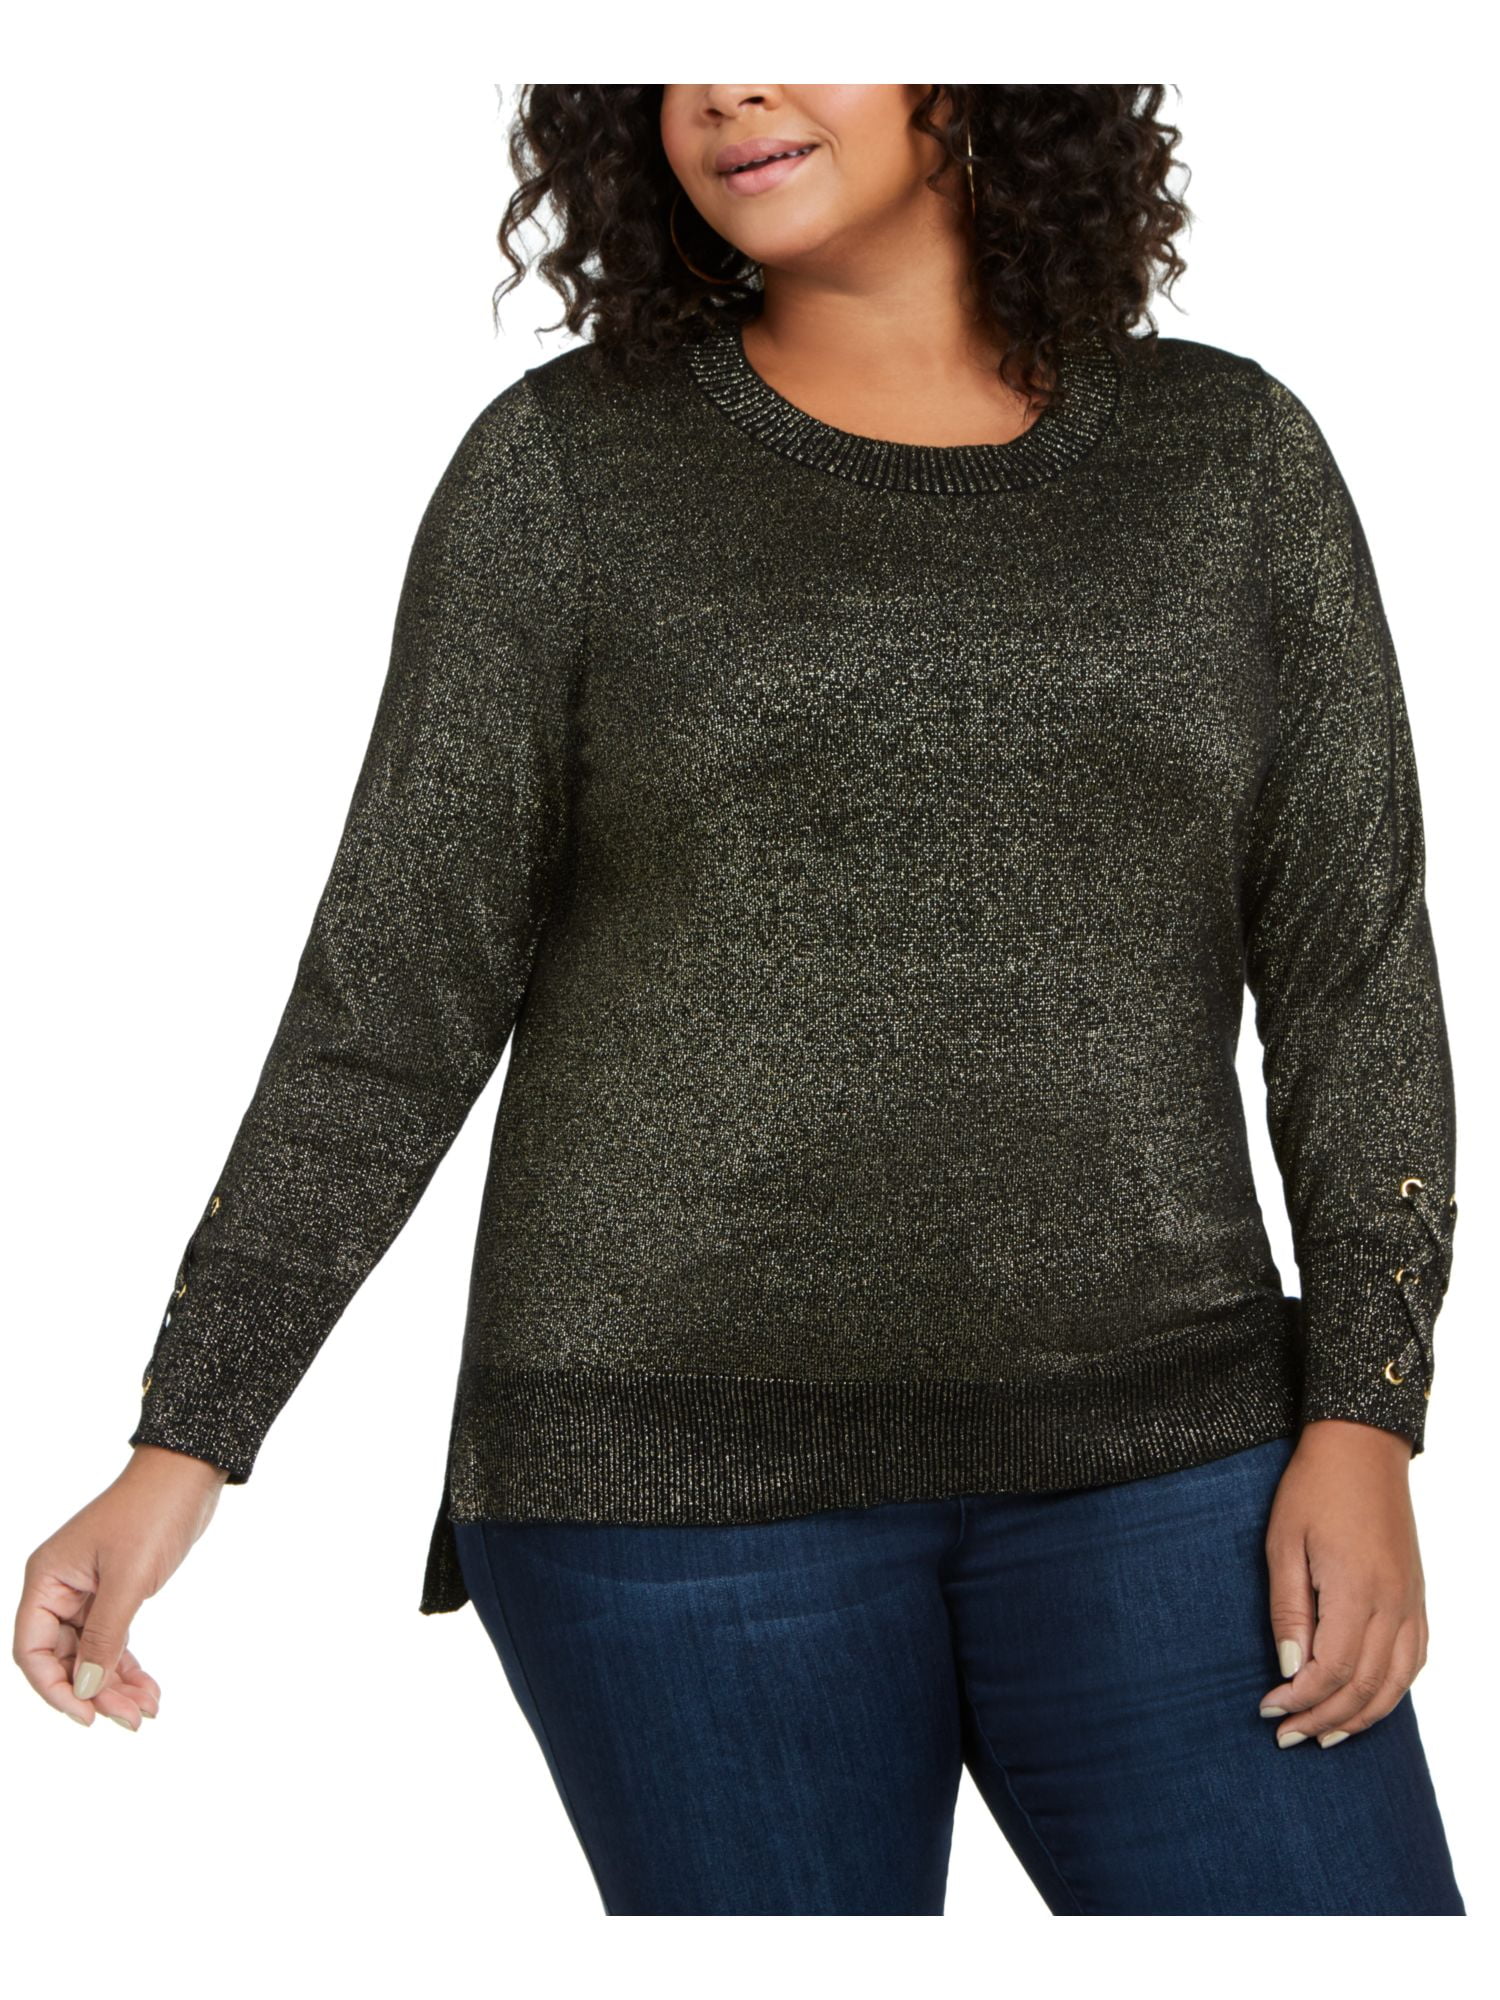 MICHAEL KORS Womens Gold Matalic Long Sleeve Evening Sweater Size: 2X -  